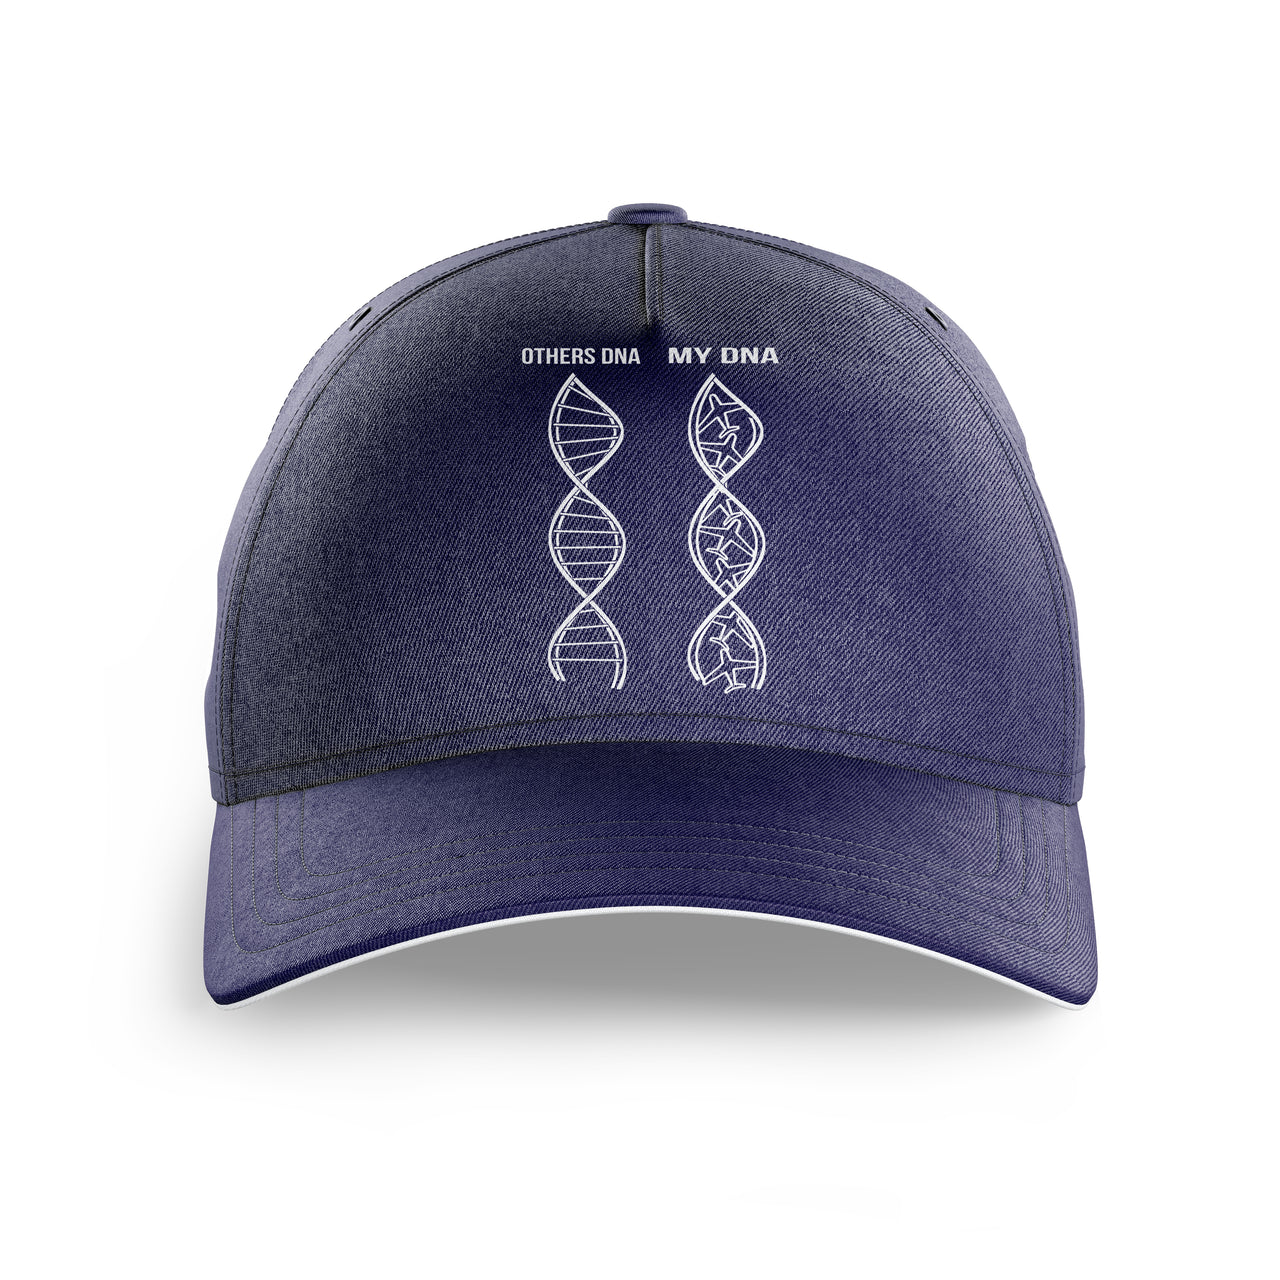 Aviation DNA Printed Hats